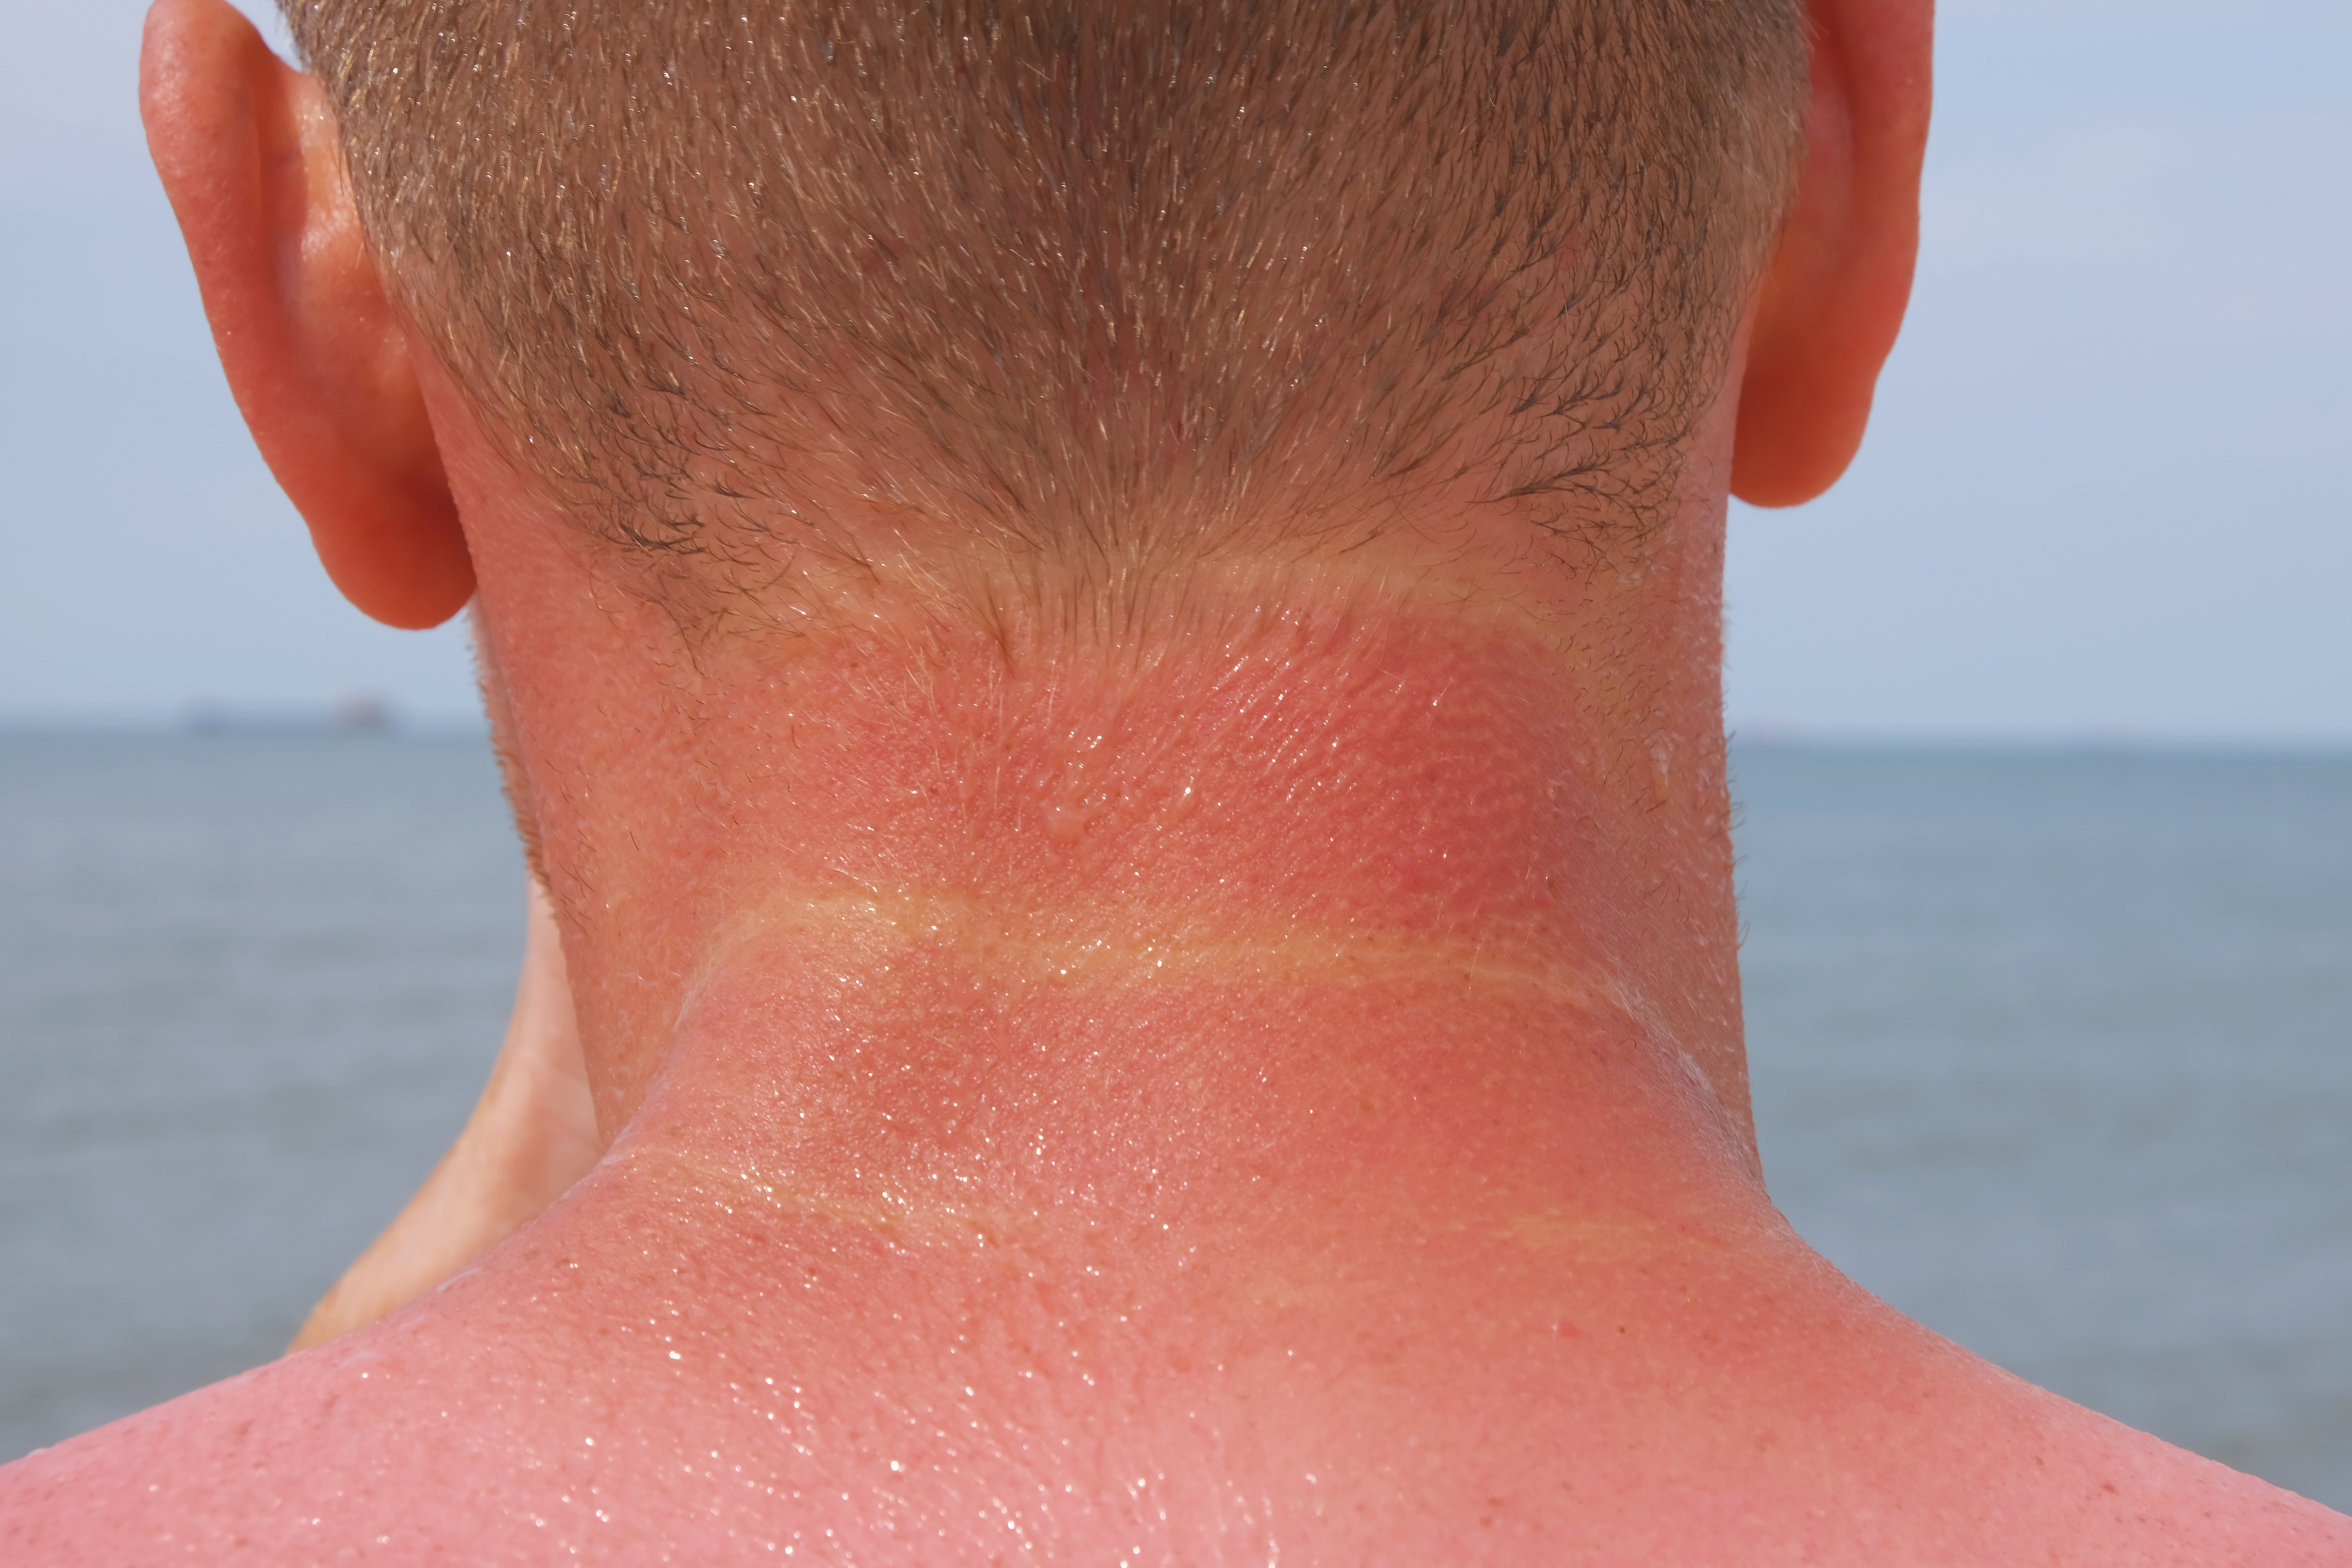 The man received sunburn on the seashore